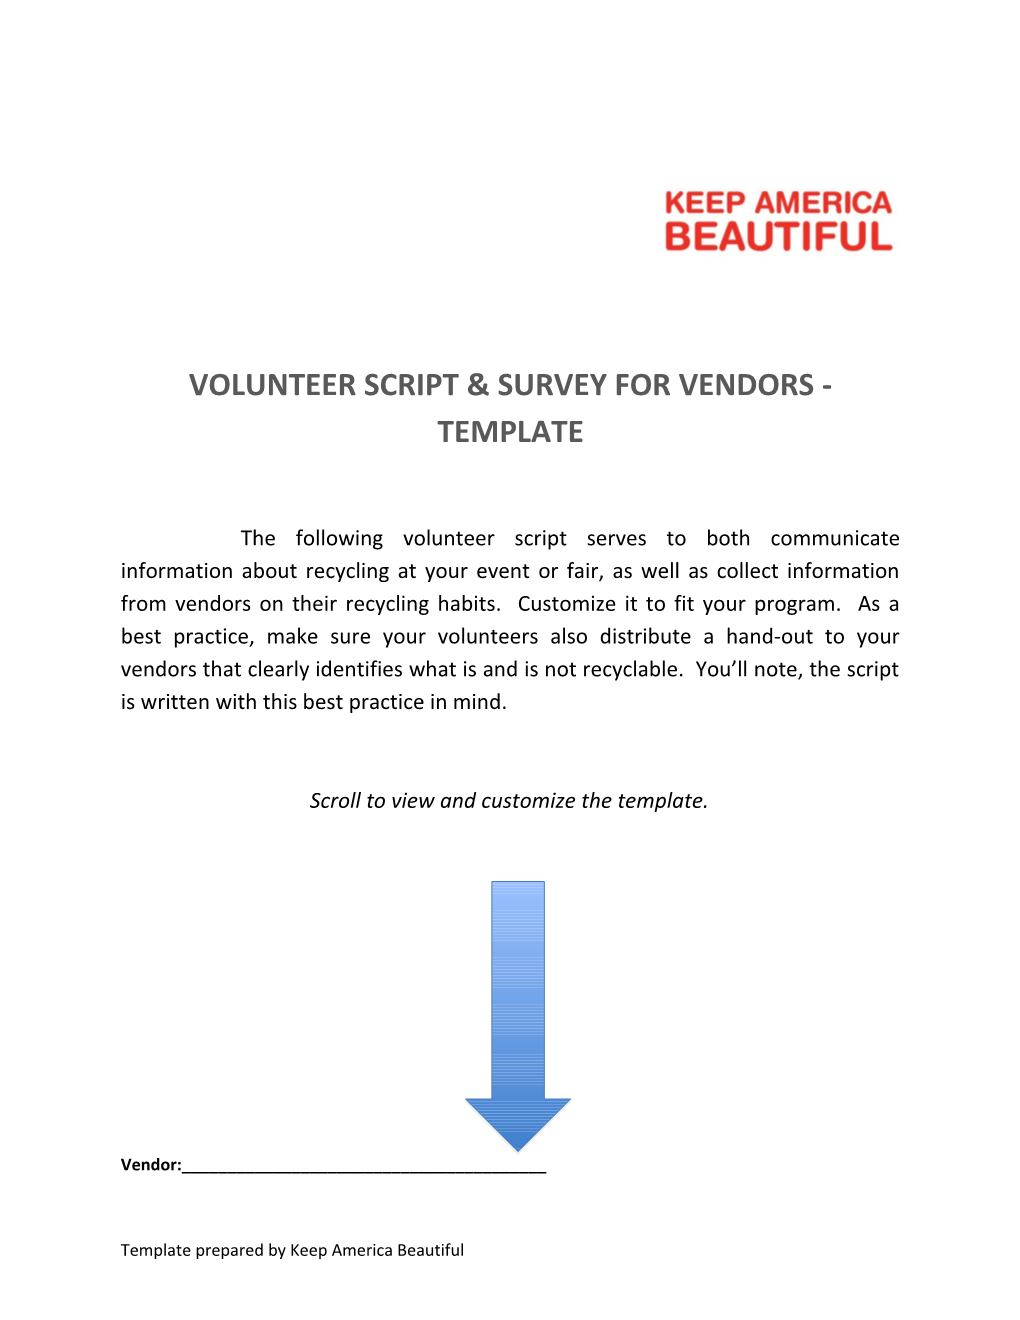 Volunteer Script & Survey for Vendors - Template